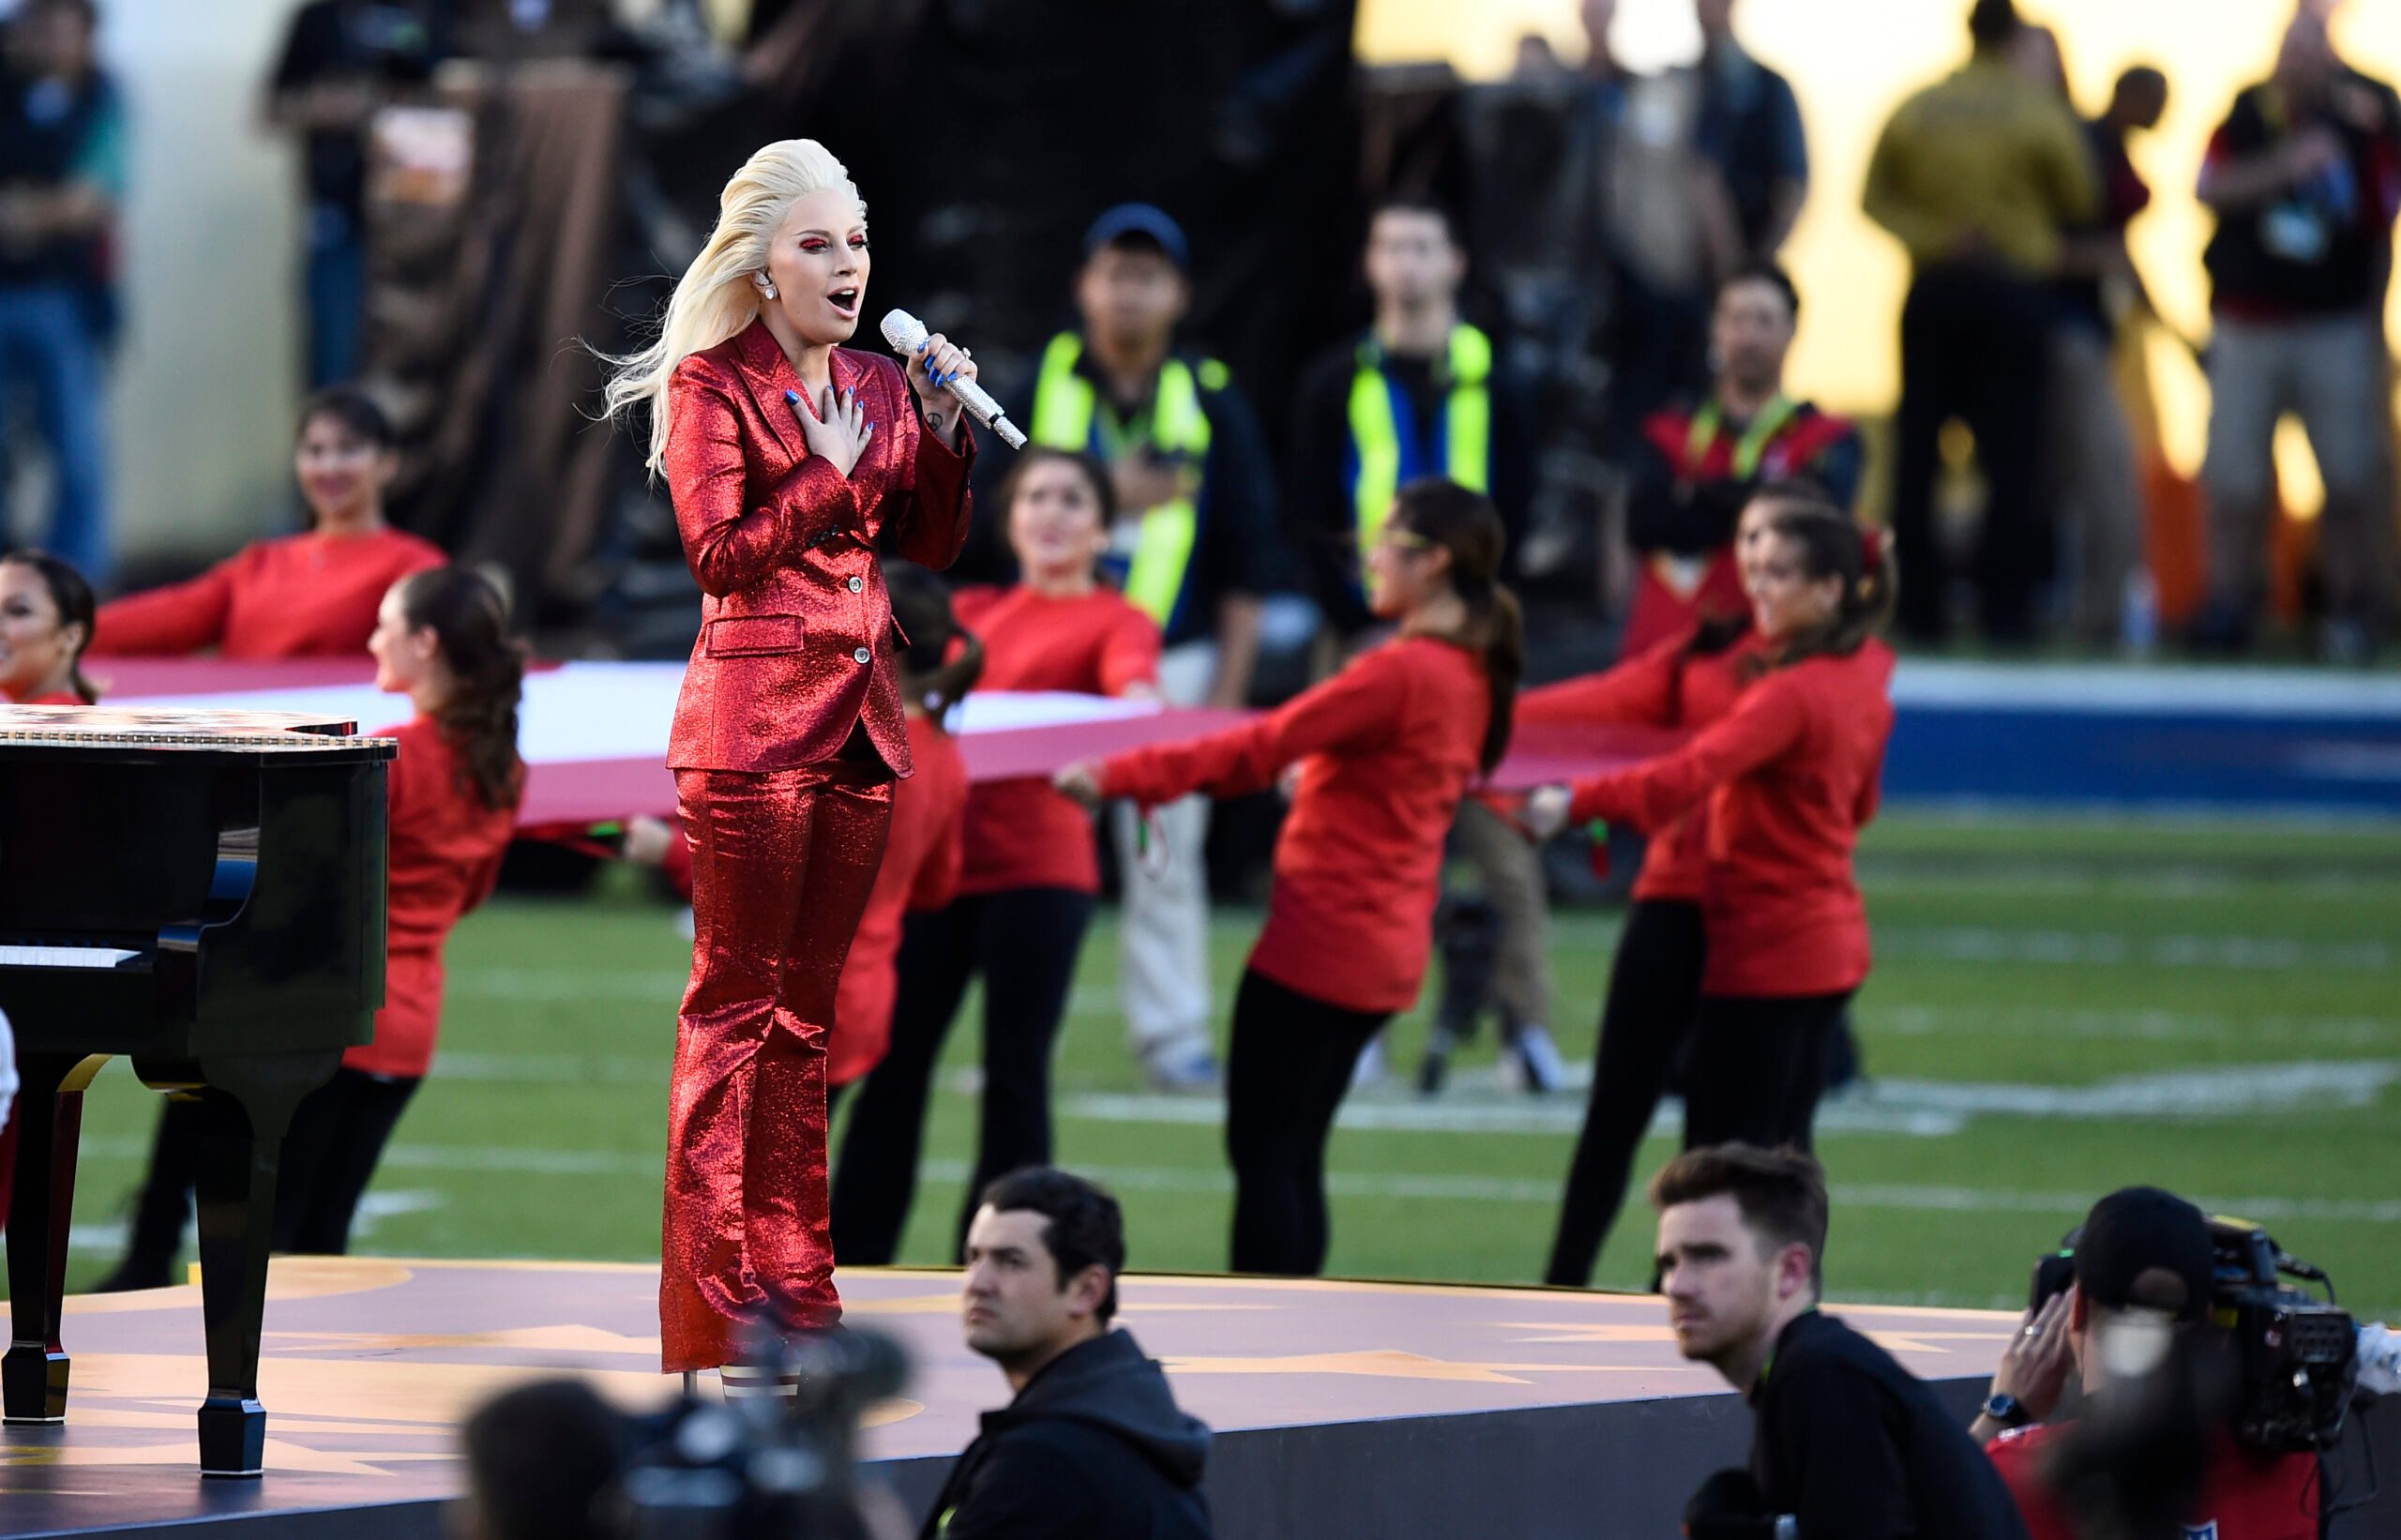 IN PHOTOS: Lady Gaga performs US national anthem at Super Bowl 50